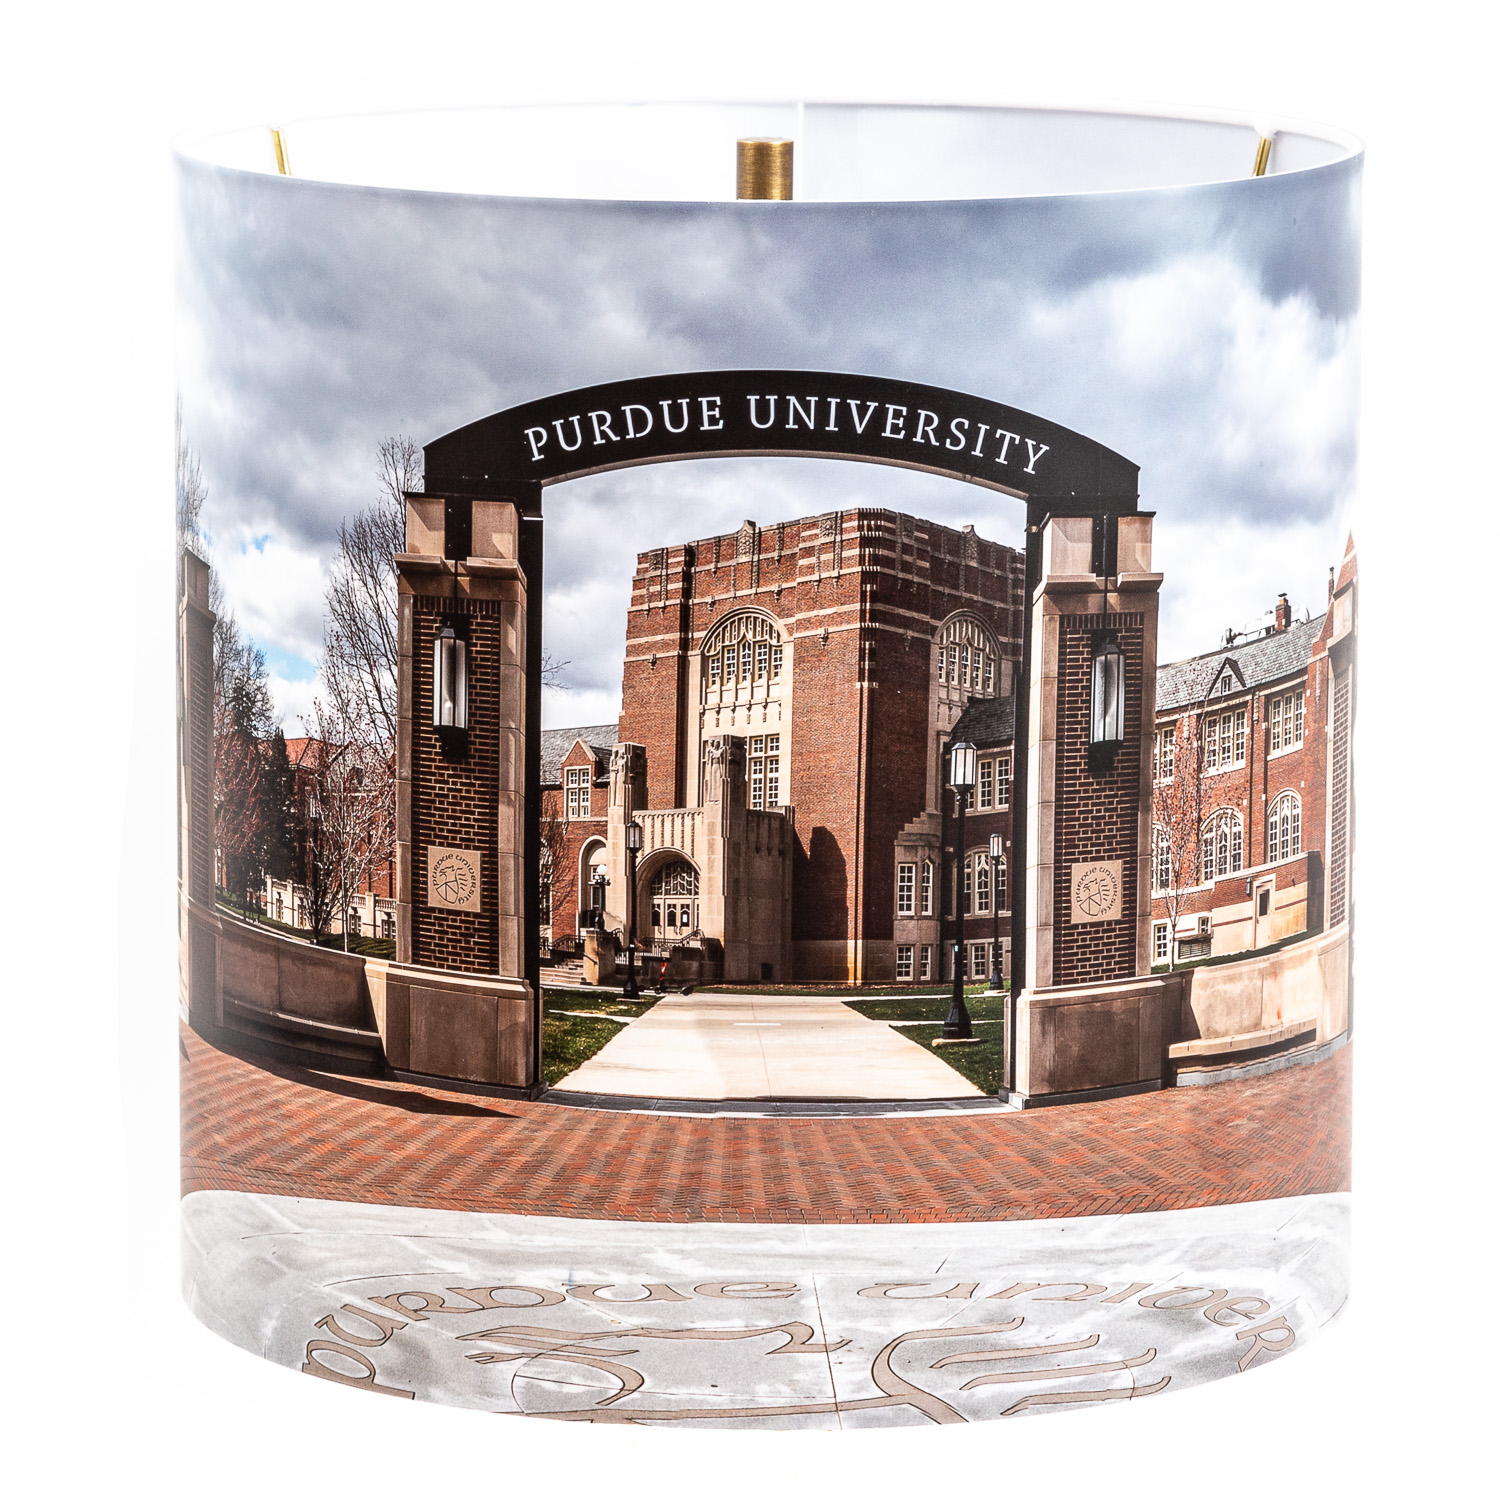 122: Purdue University gateway arch and Memorial Union